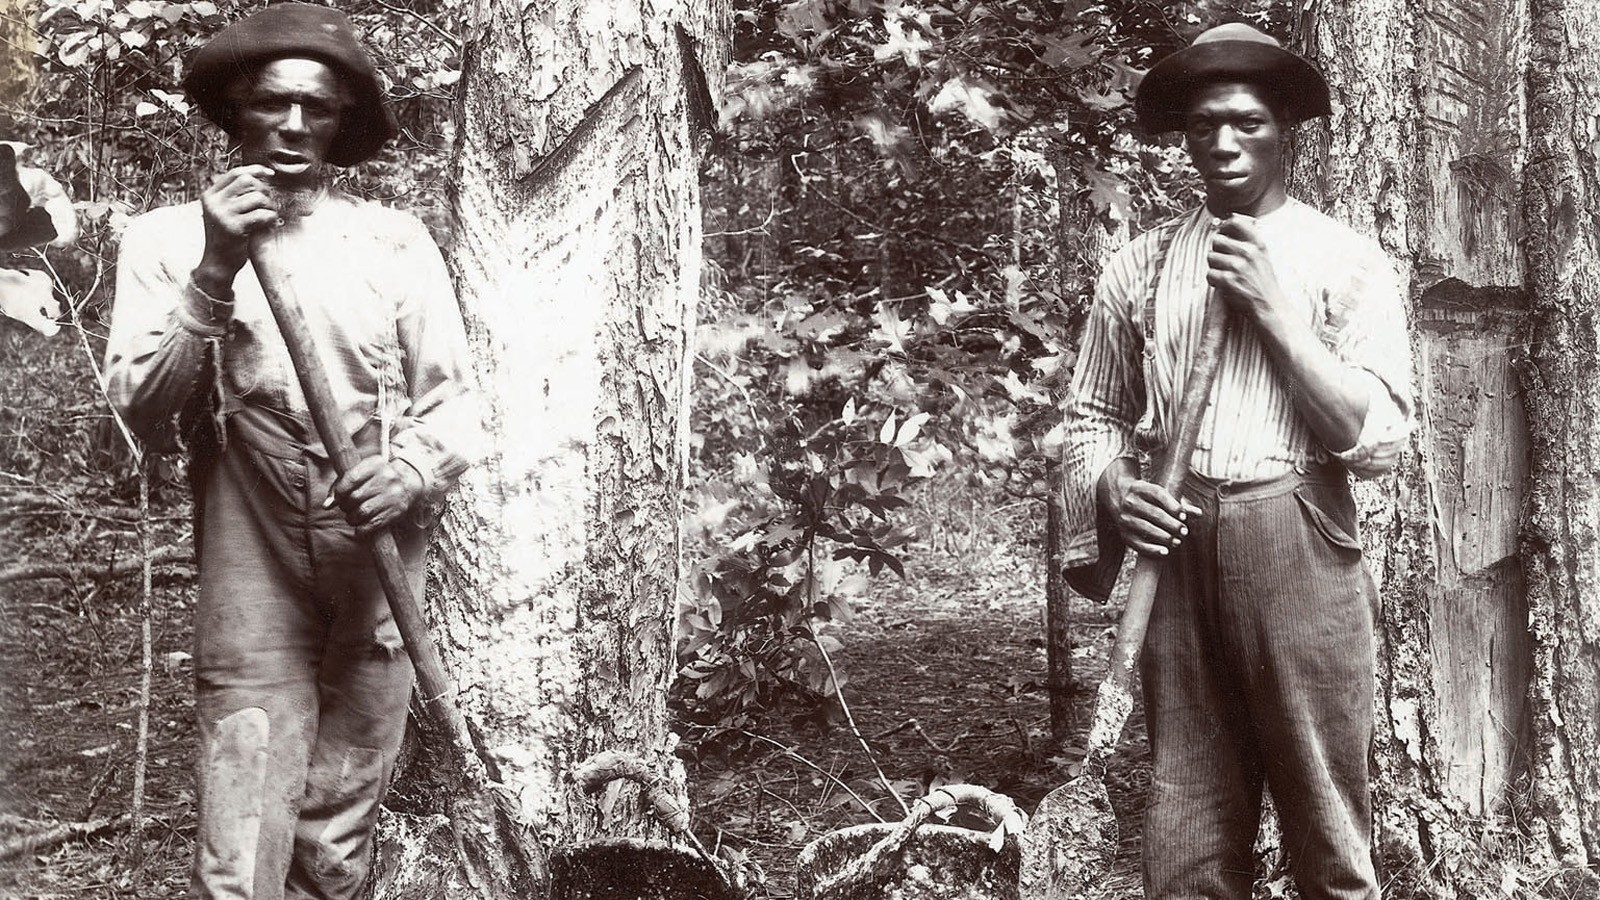 Pine resin harvesting, circa 1890s